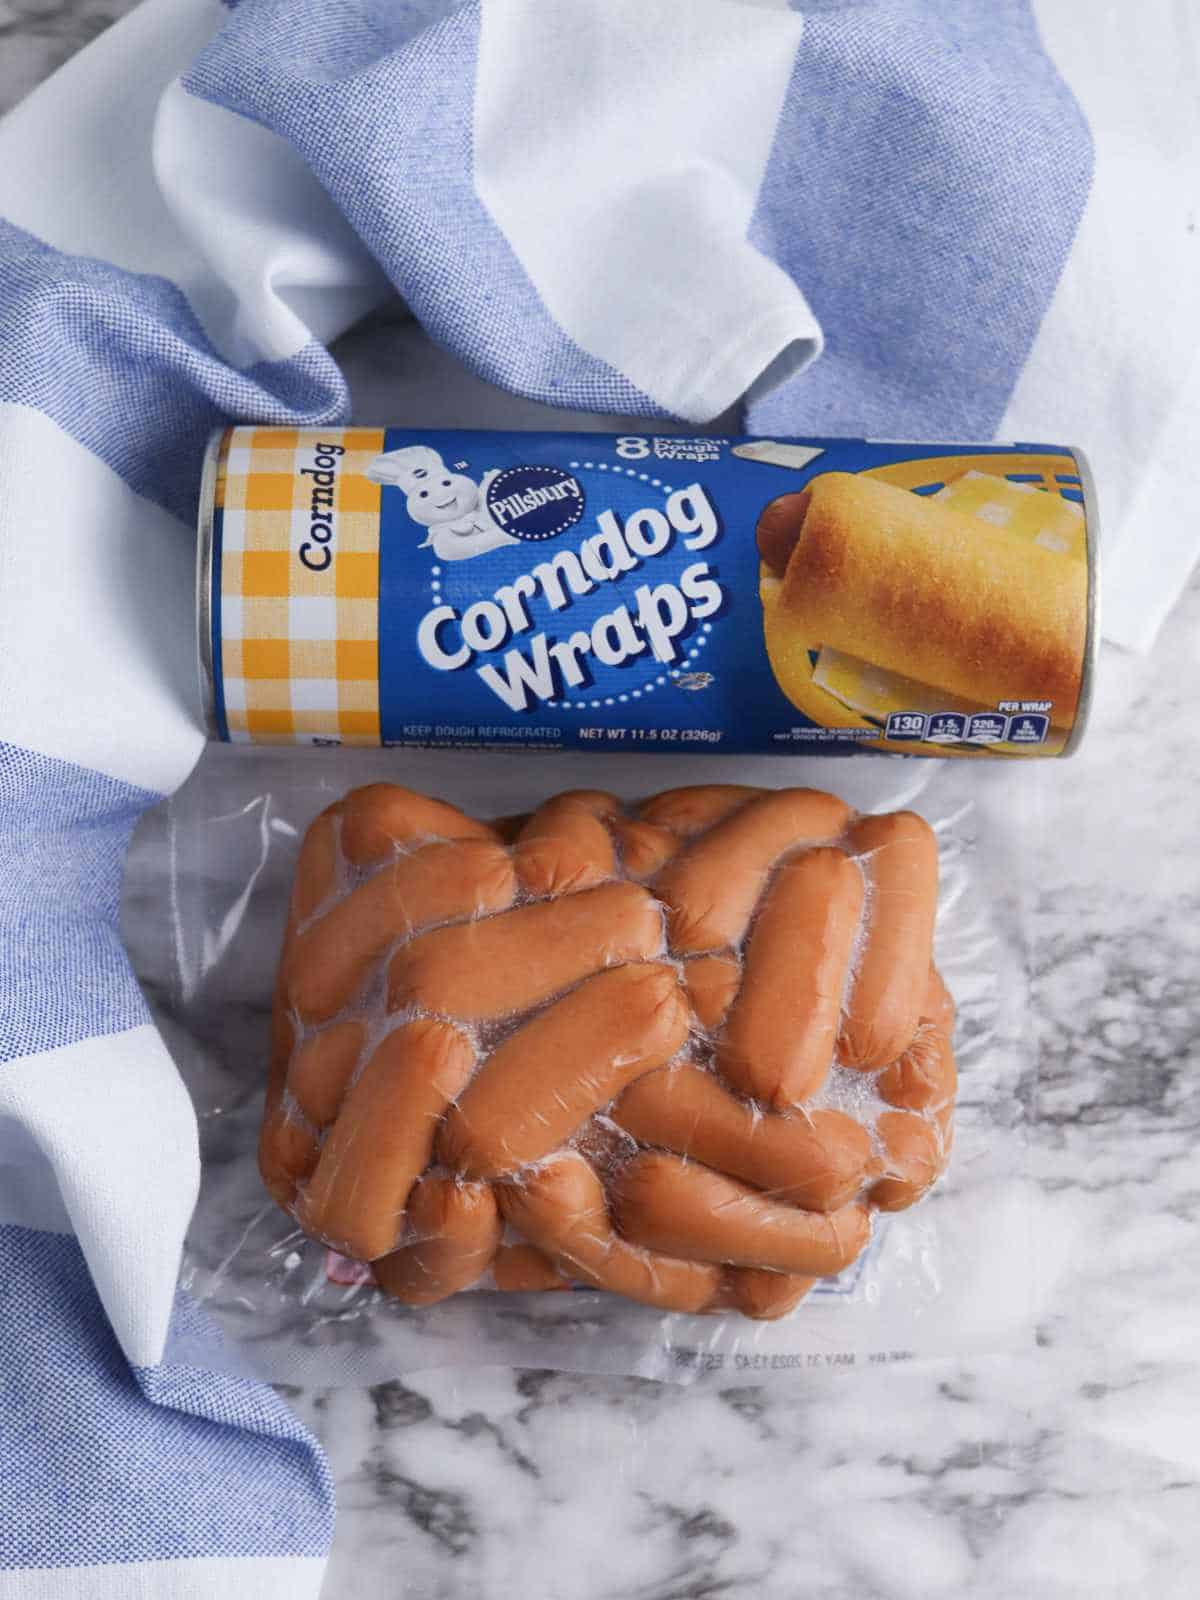 Roll of Pillsbury corndog wraps and mini smoked sausages.